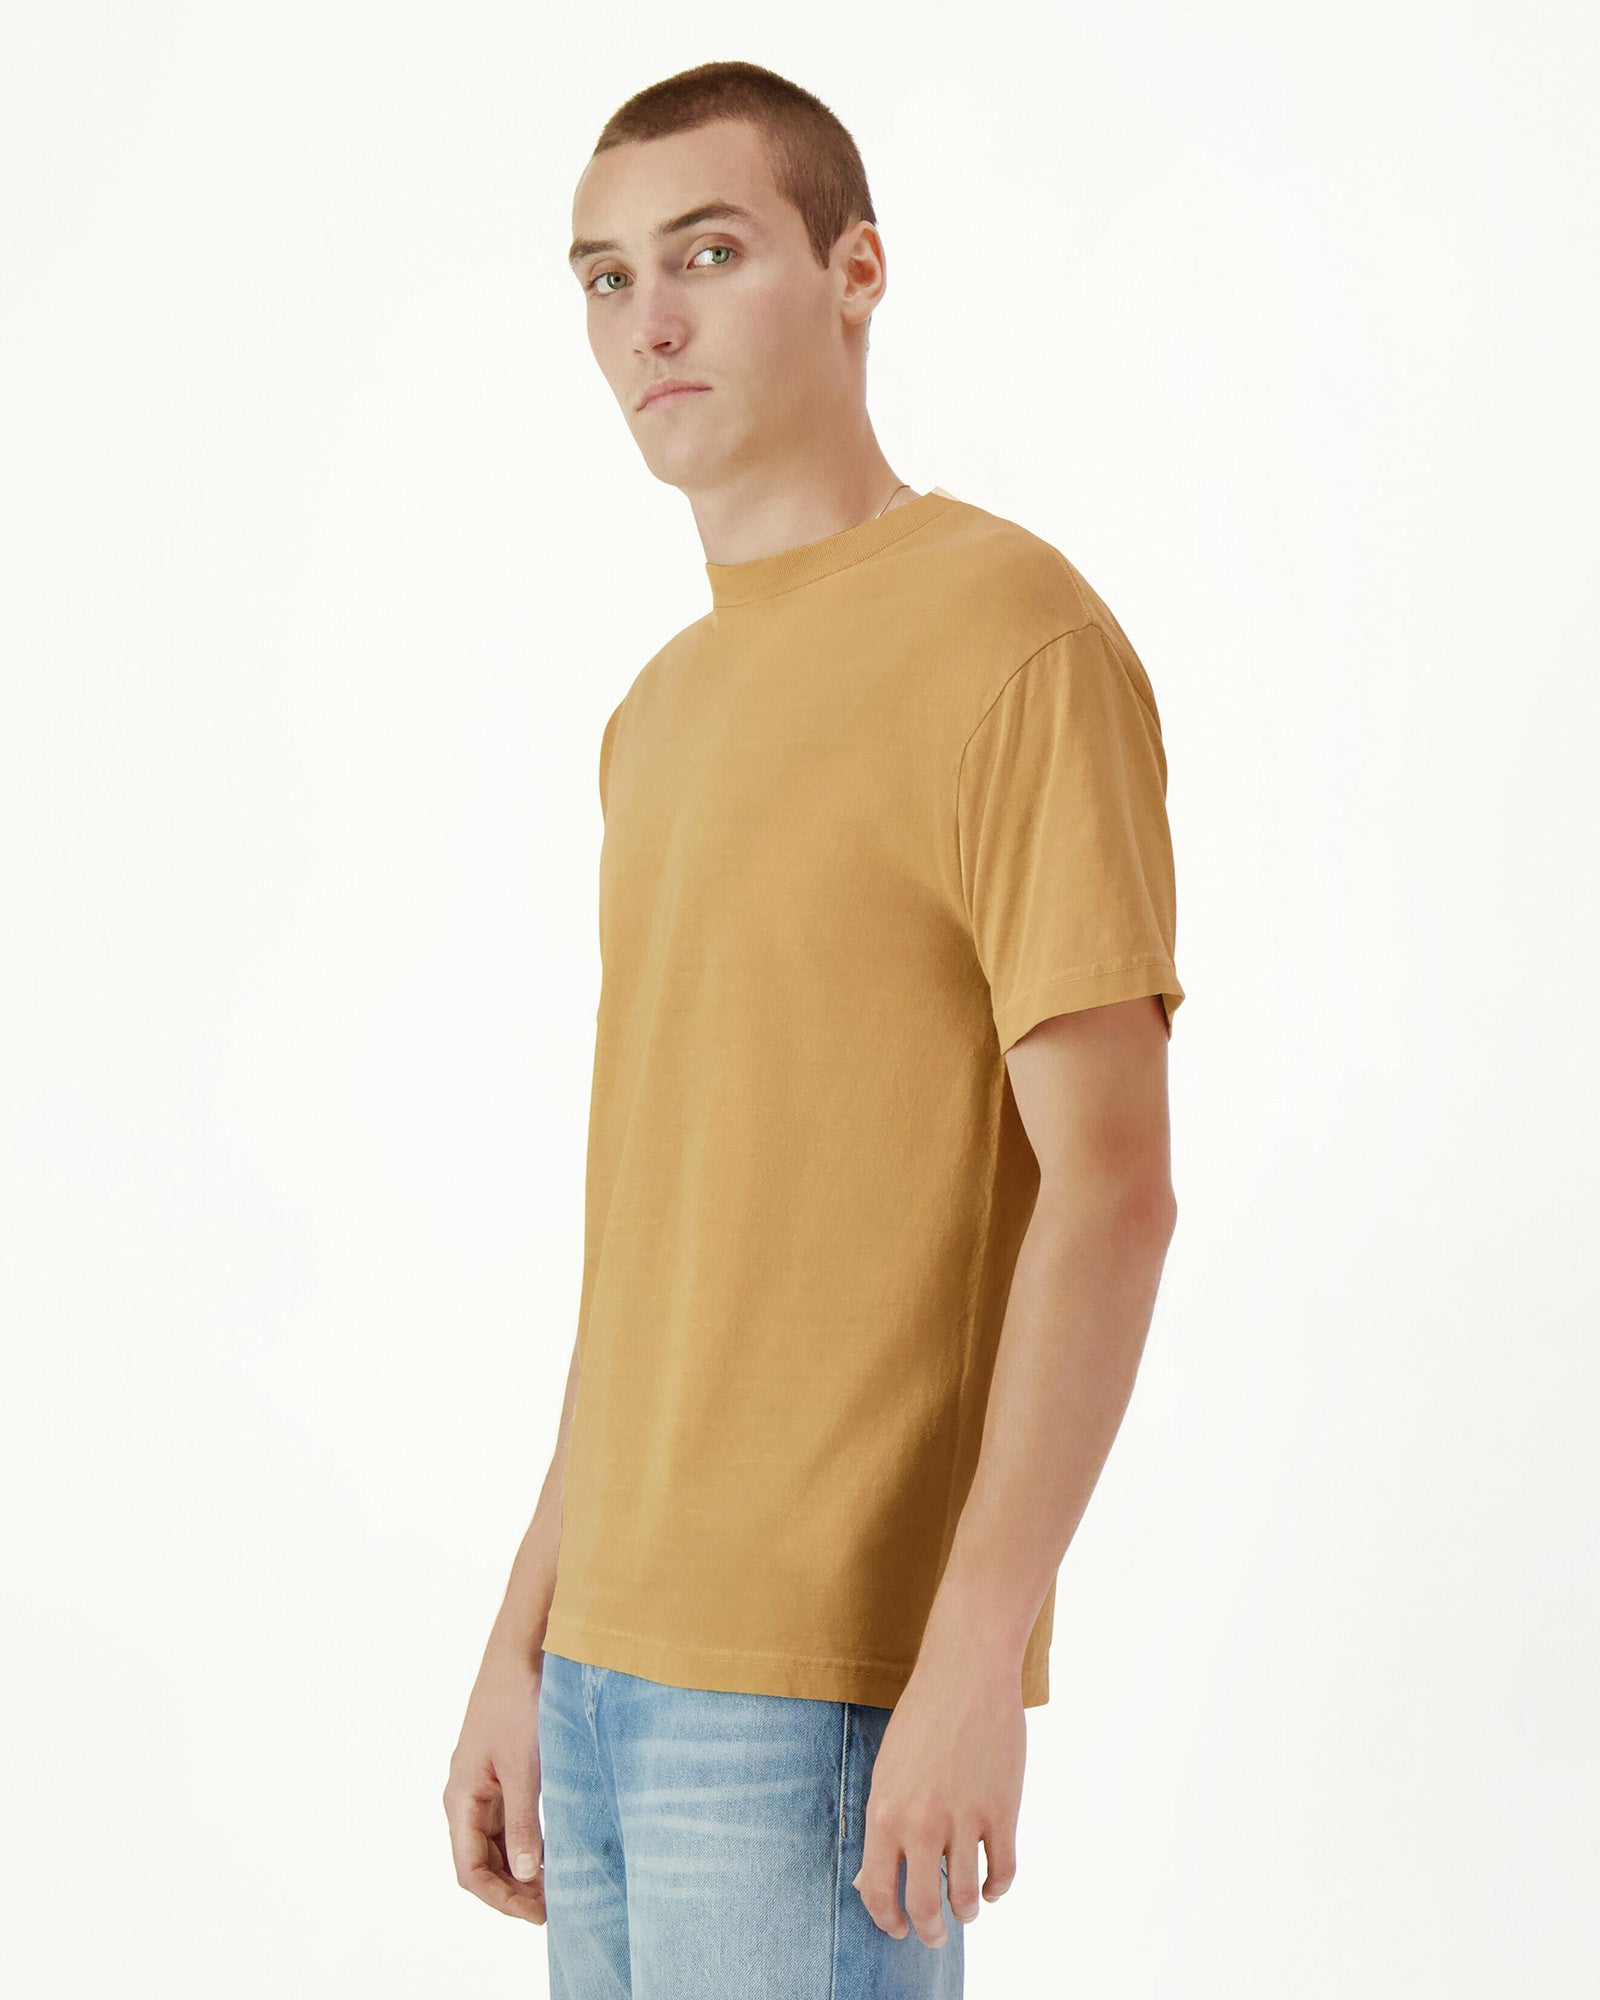 Garment Dyed Heavyweight Unisex T-Shirt - Faded Mustard